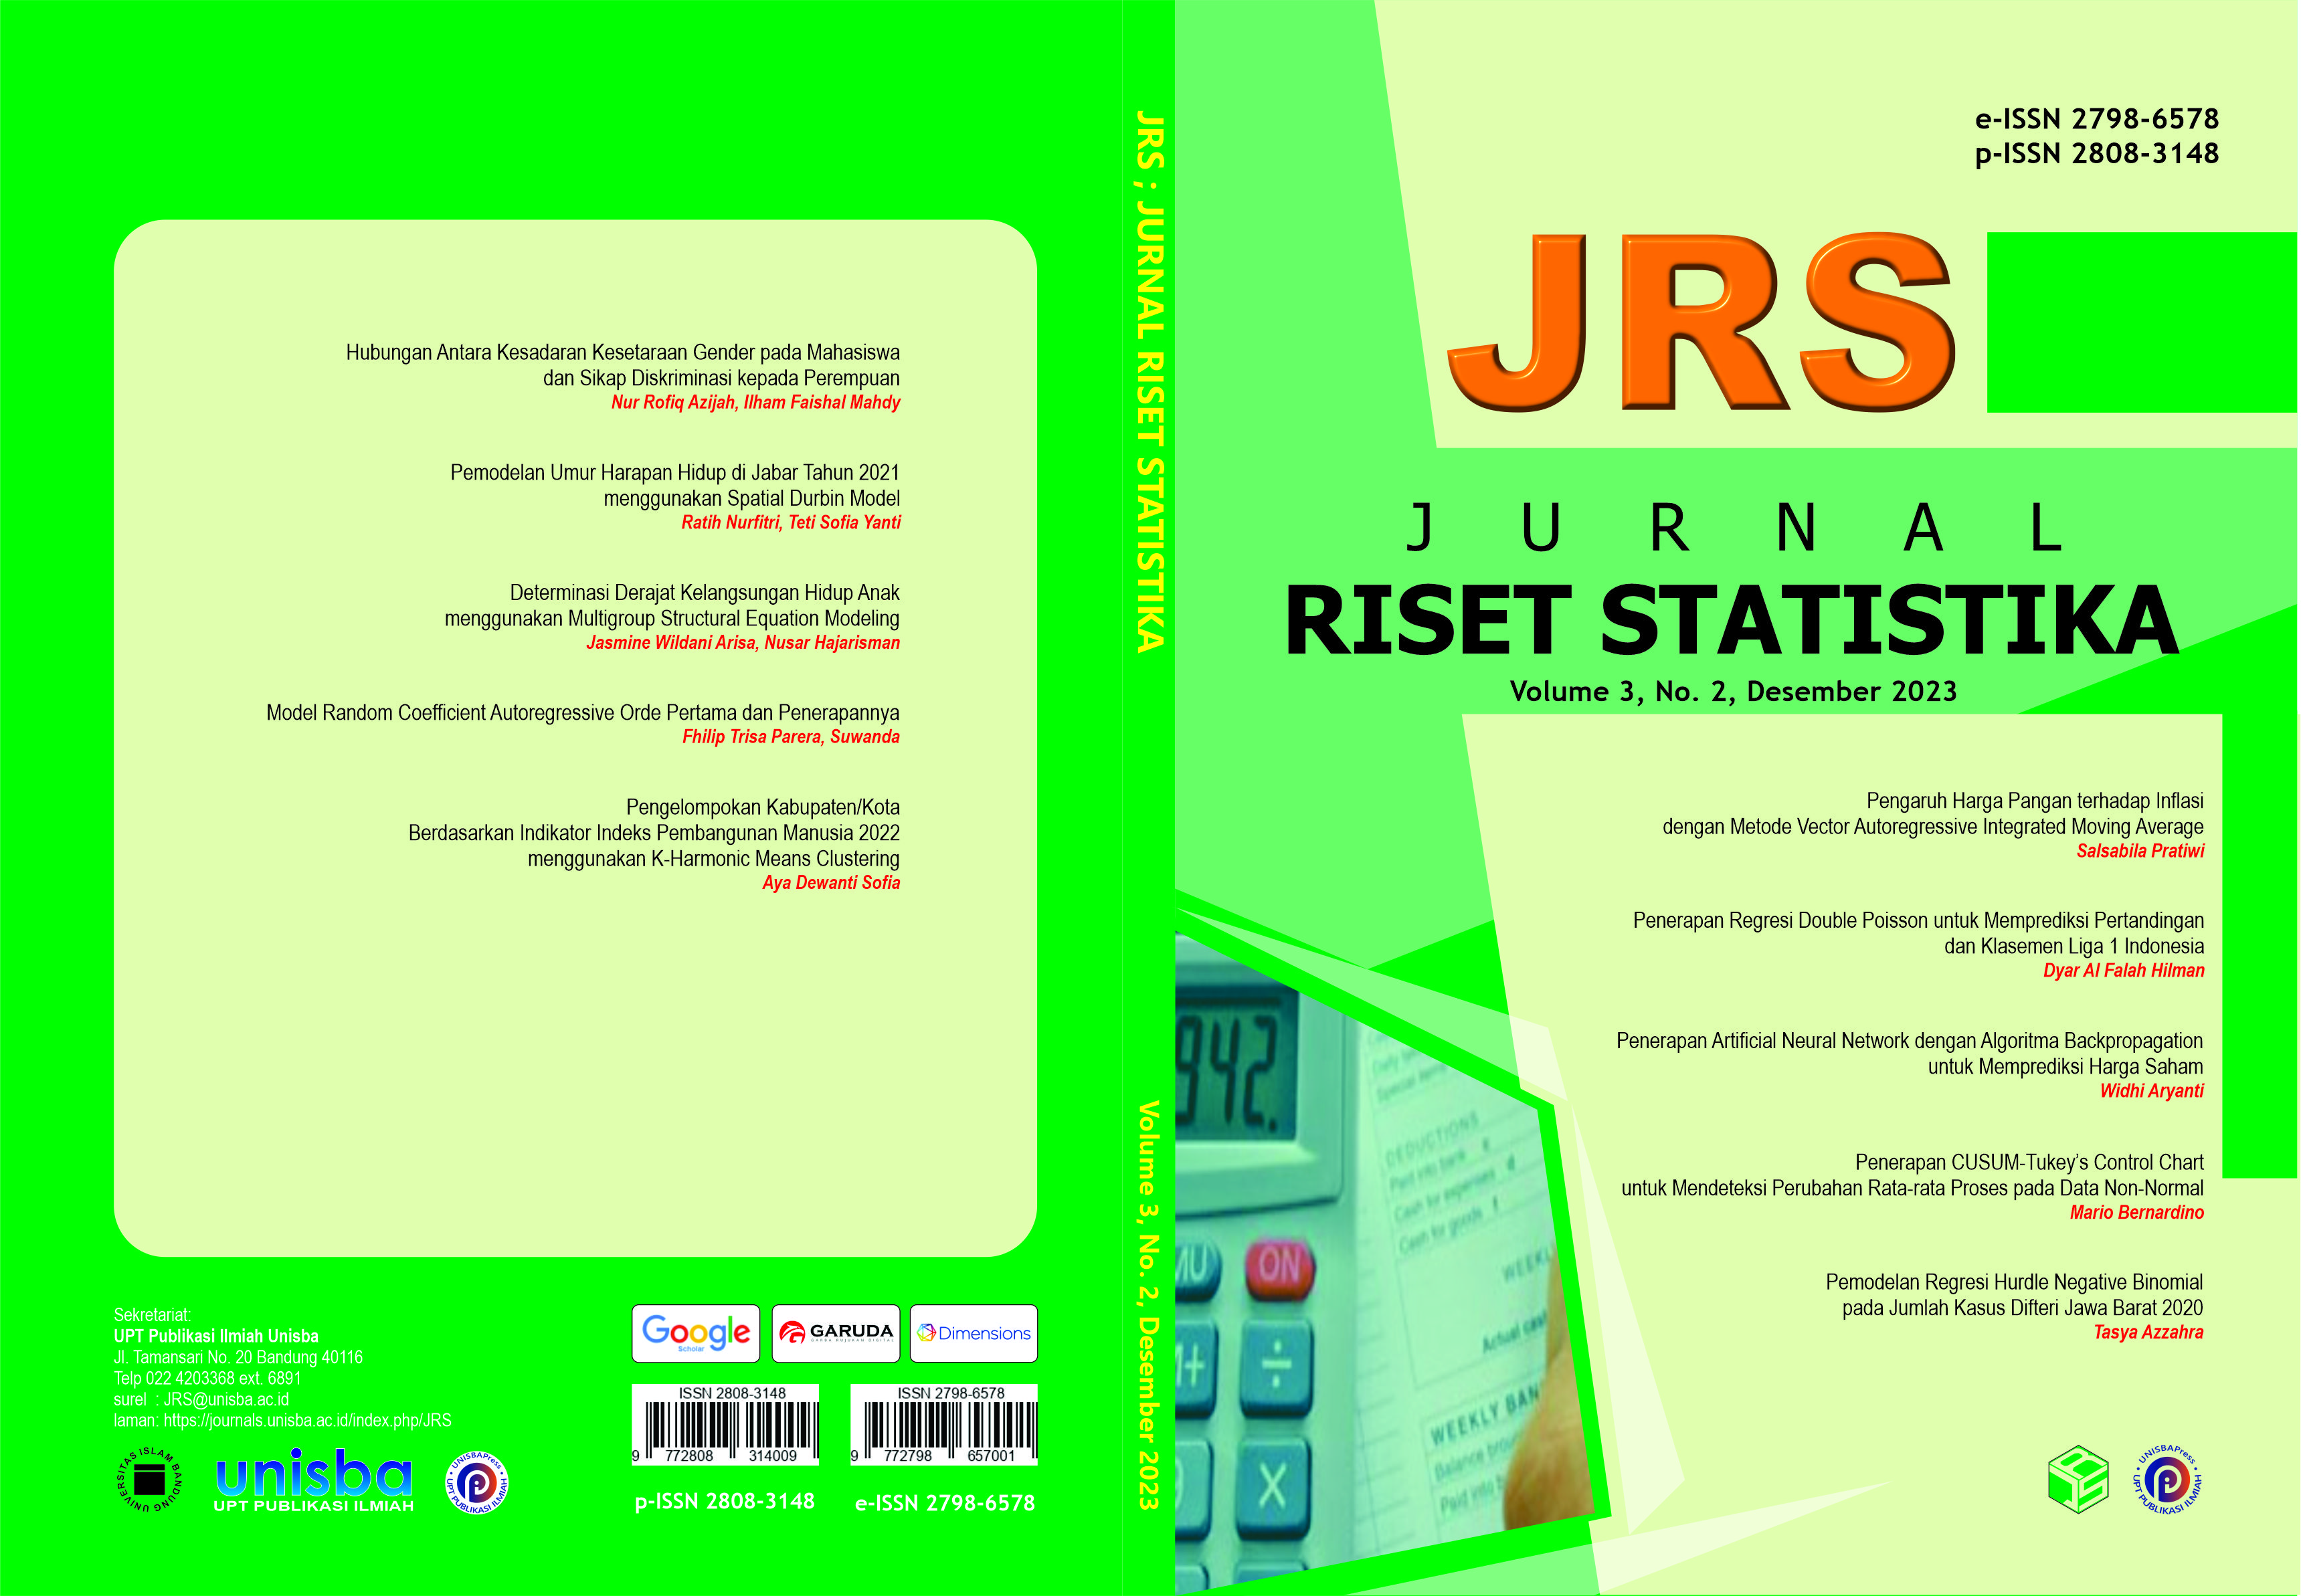 					View Volume 3, No. 2, Desember 2023, Jurnal Riset Statistika (JRS)
				